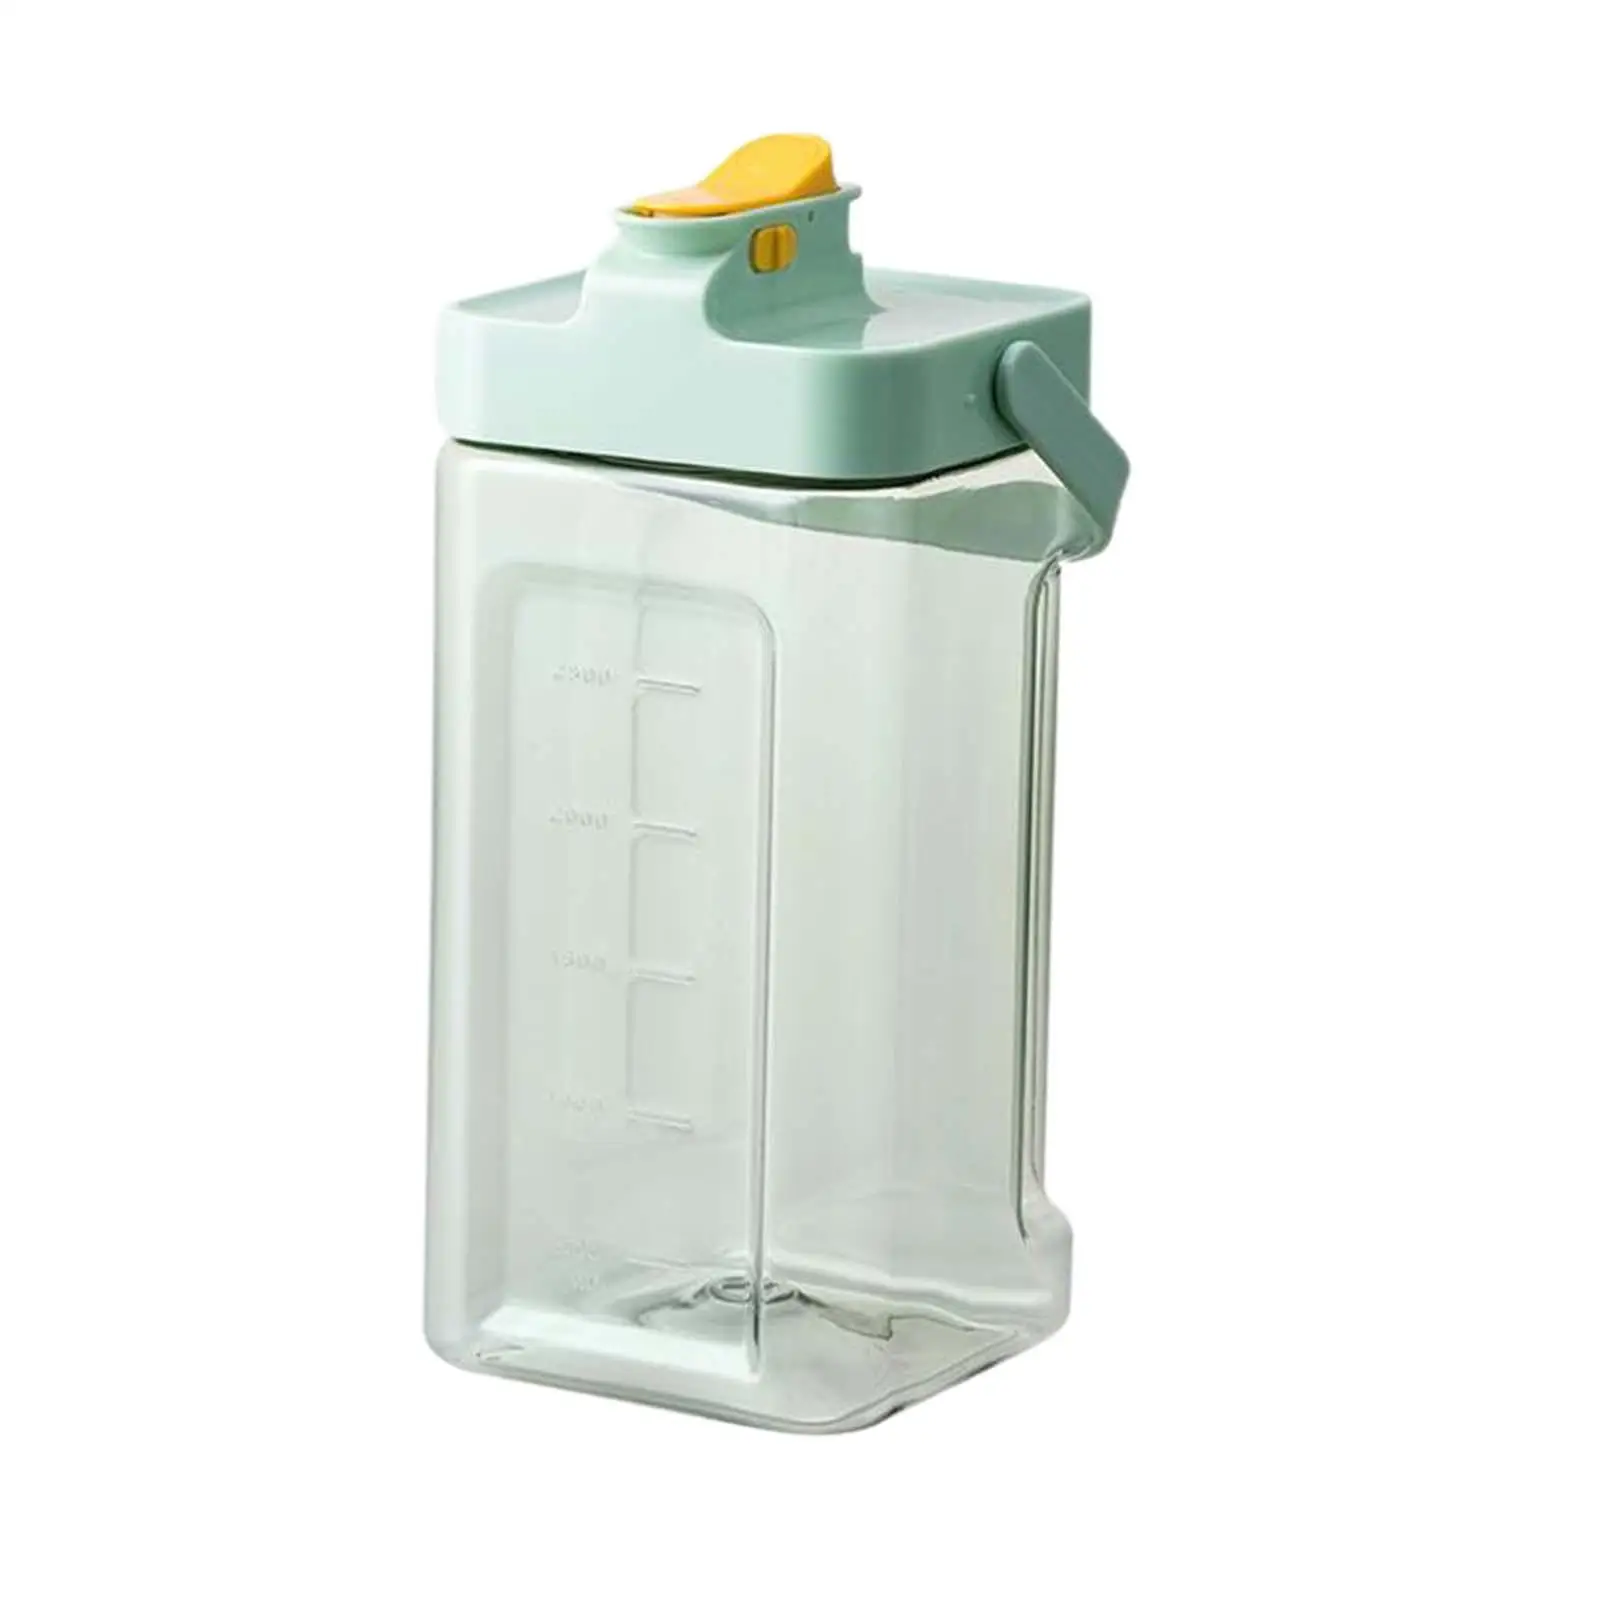 Cold Kettle Fruit Juice Jug, High Temperature Resistant, Large Capacity, Water Pitcher for Tea Drink Lemonade